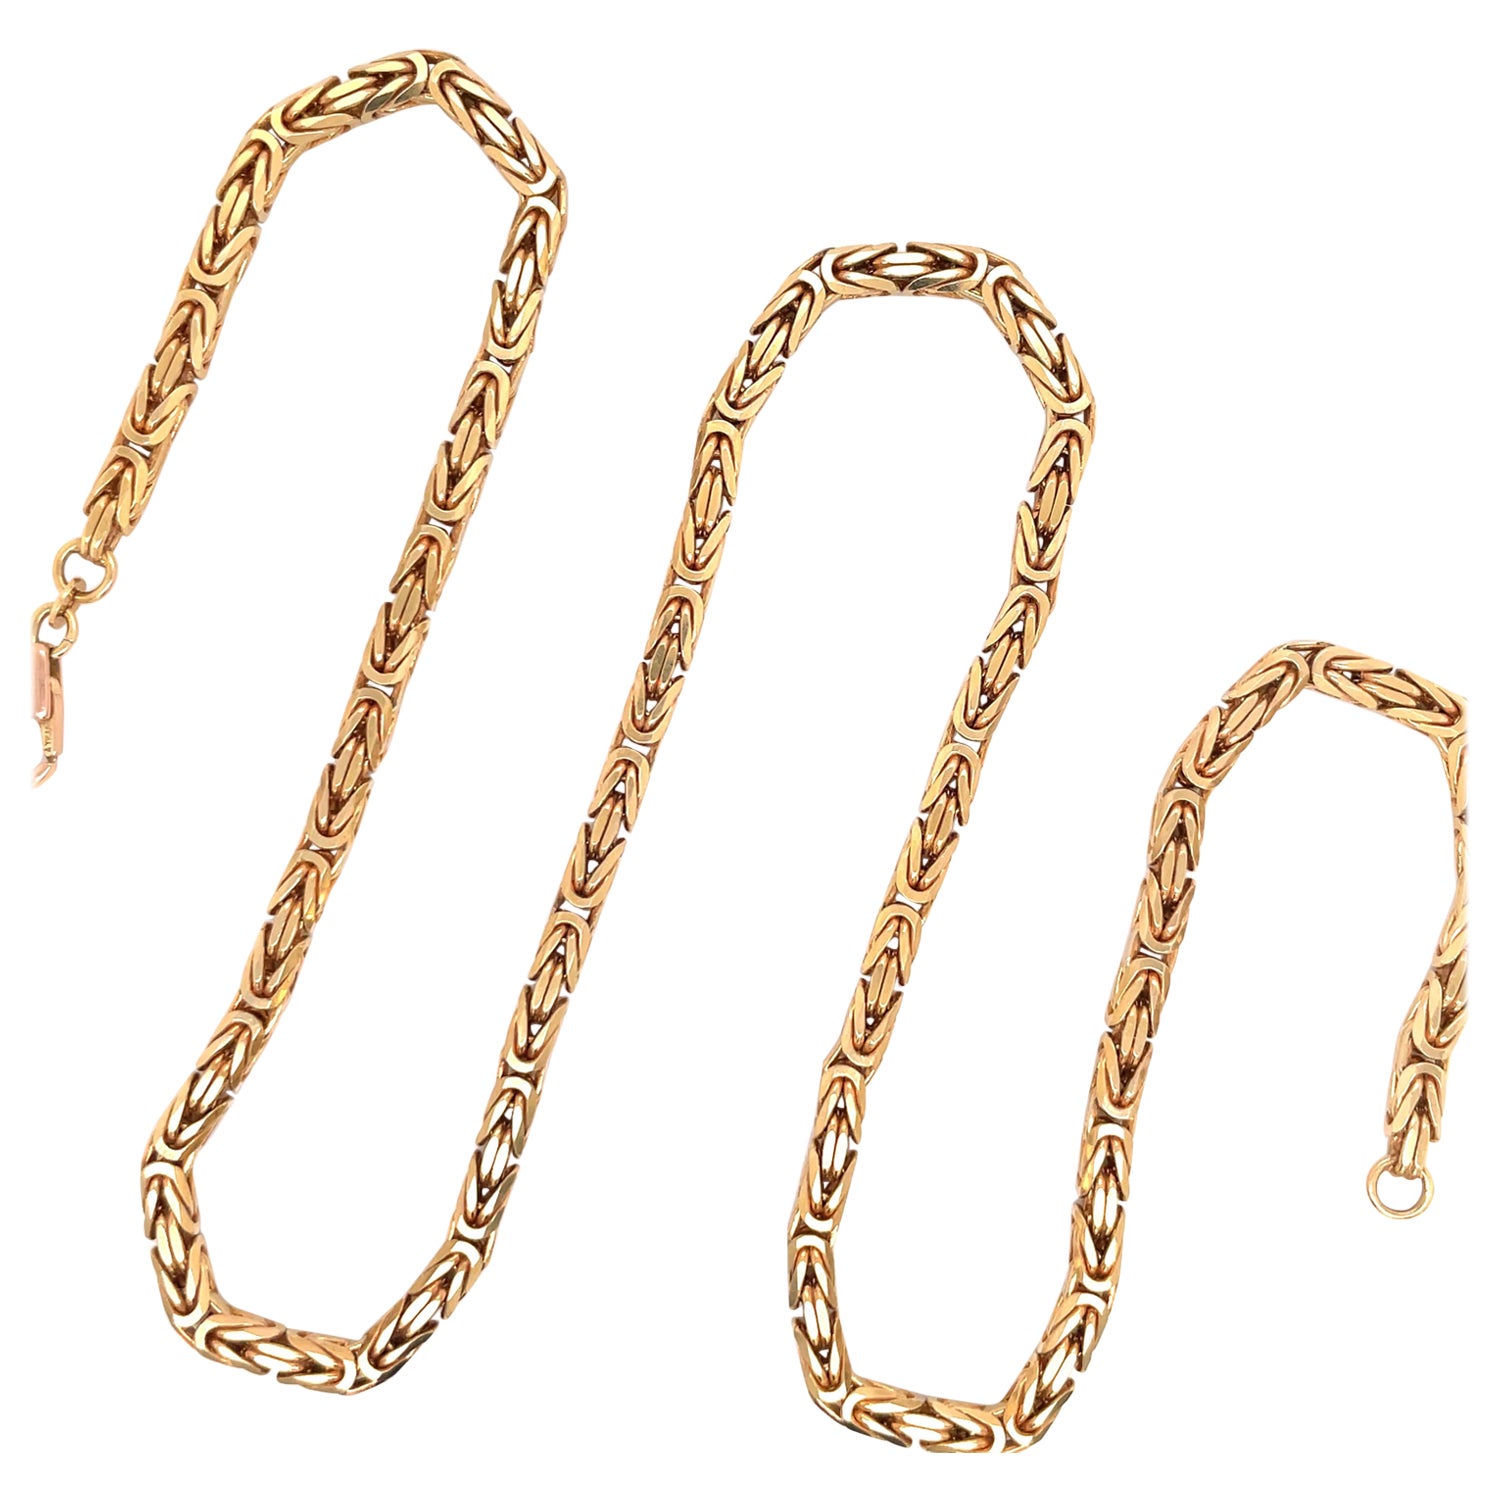 14 Karat Yellow Gold Byzantine Chain Necklace 57.3 Grams